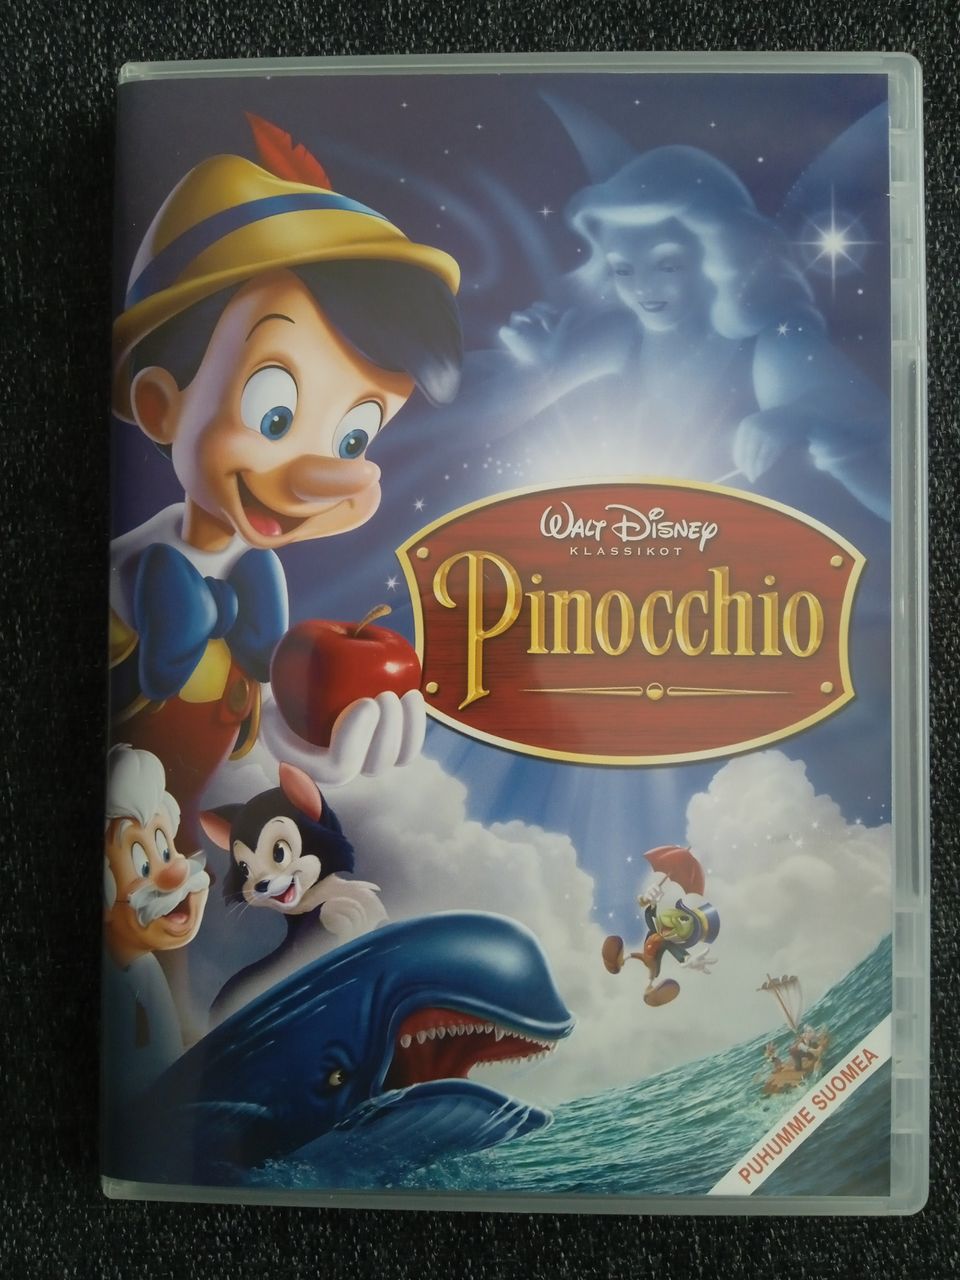 Walt Disney klassikot Pinocchio dvd